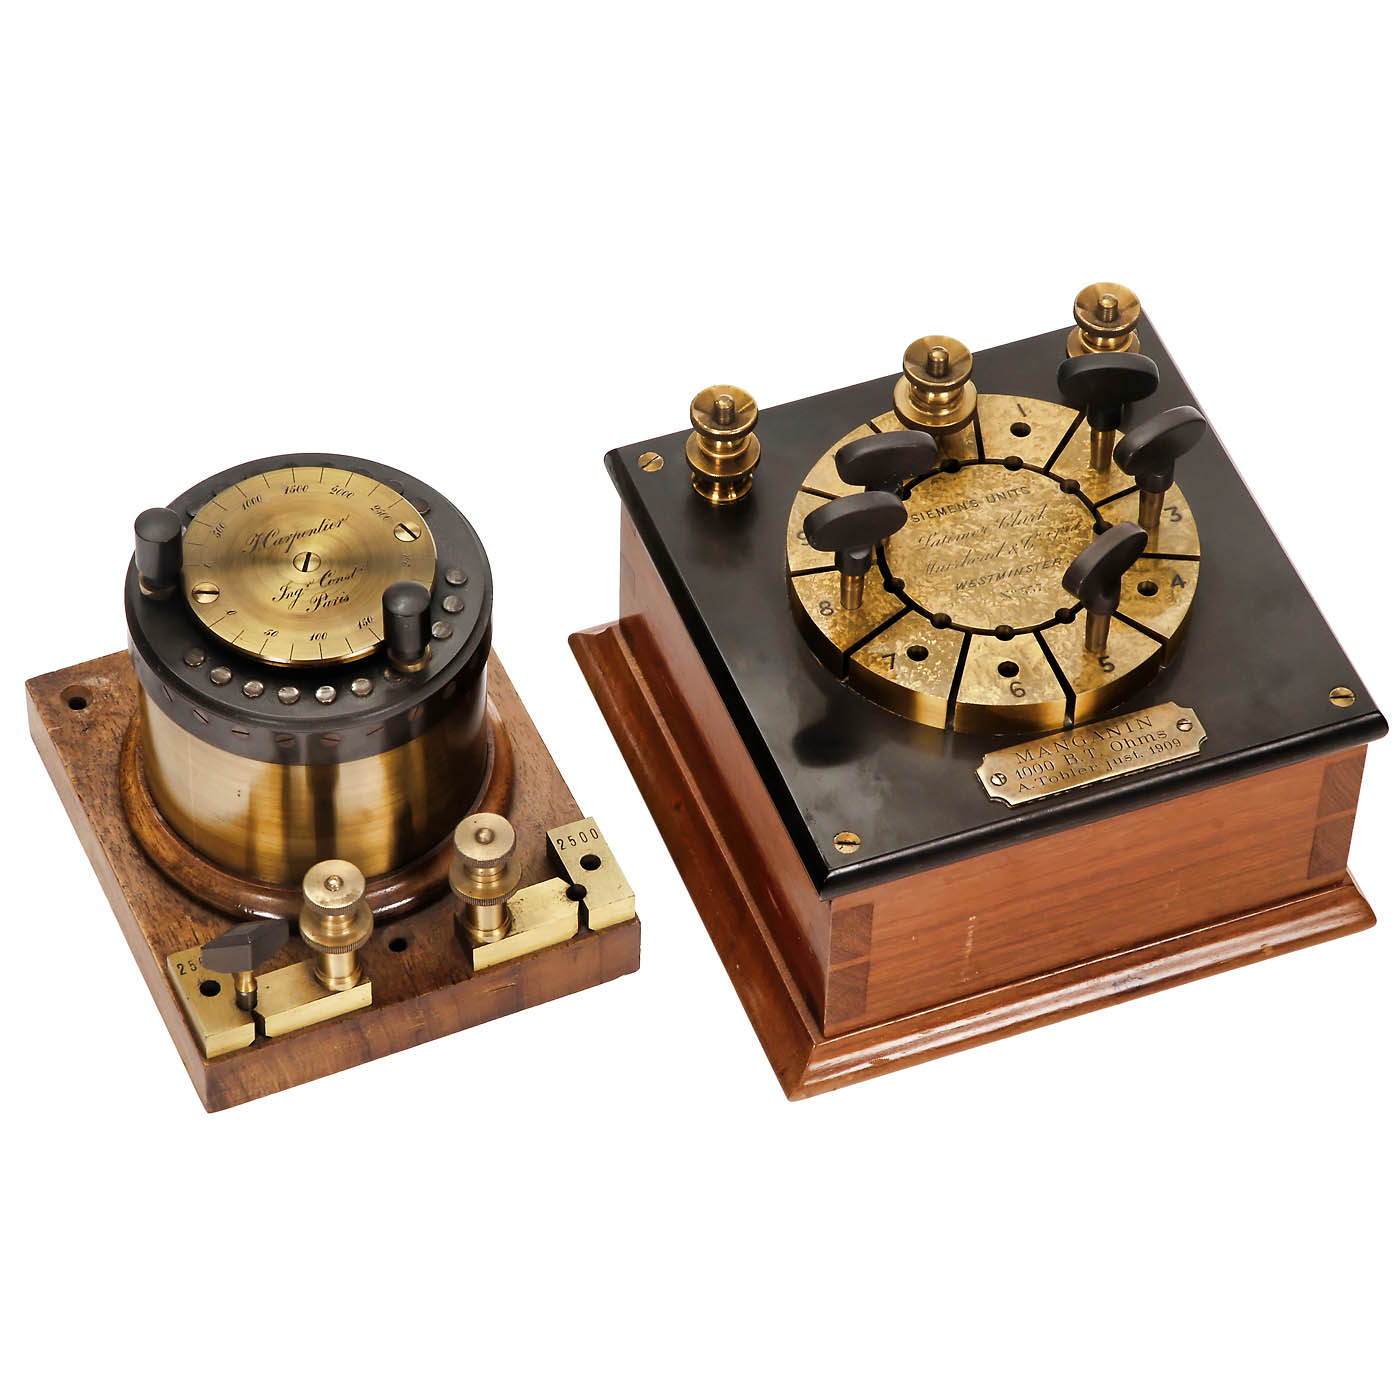 12 Precision Measuring Instruments, c. 1870-1900